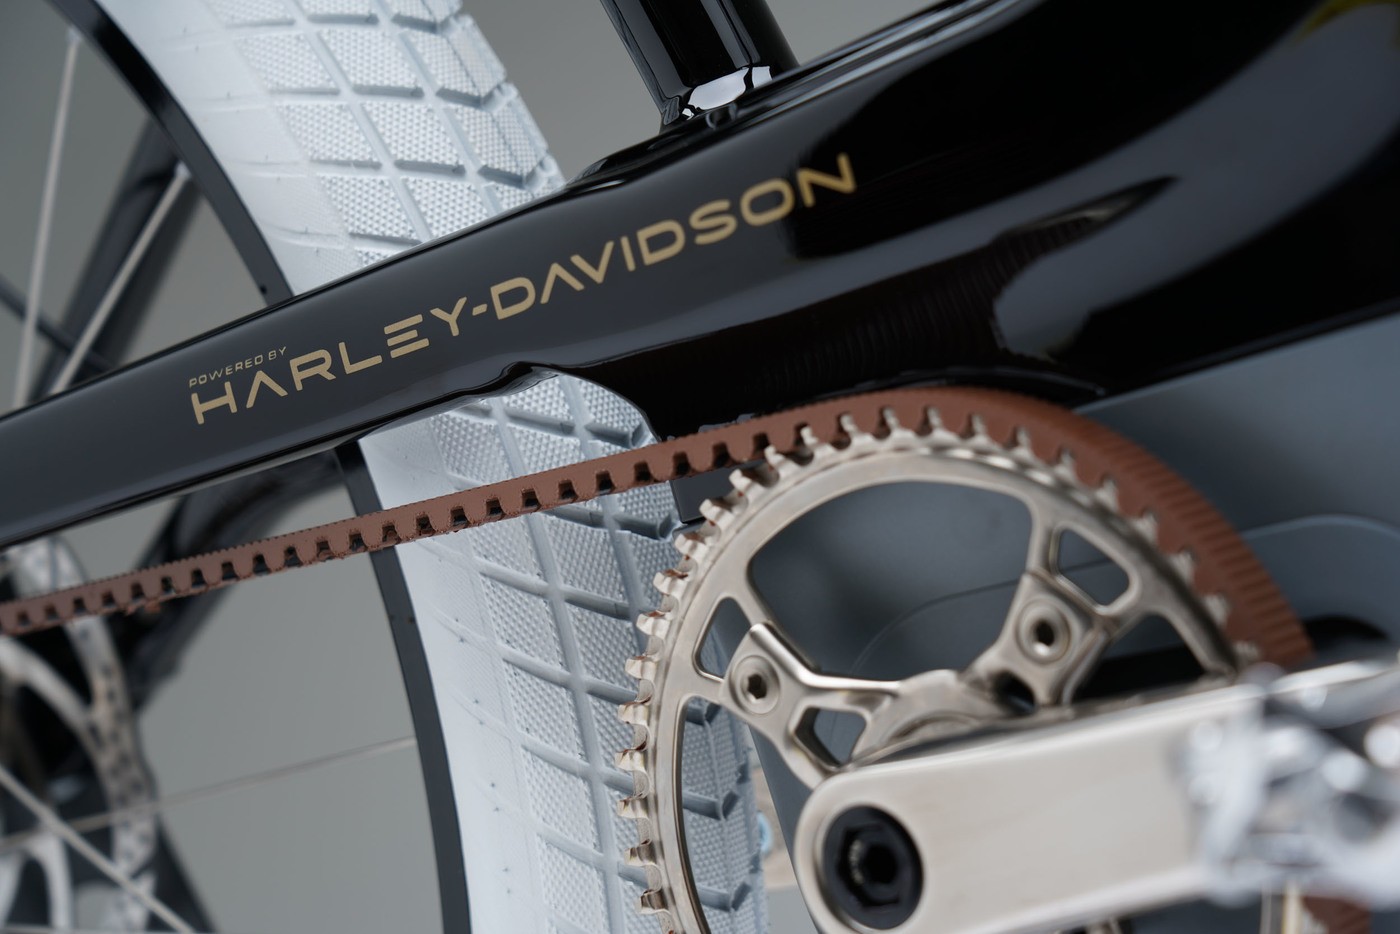 imagen 5 de Serial Number One, una bicicleta Harley Davidson.